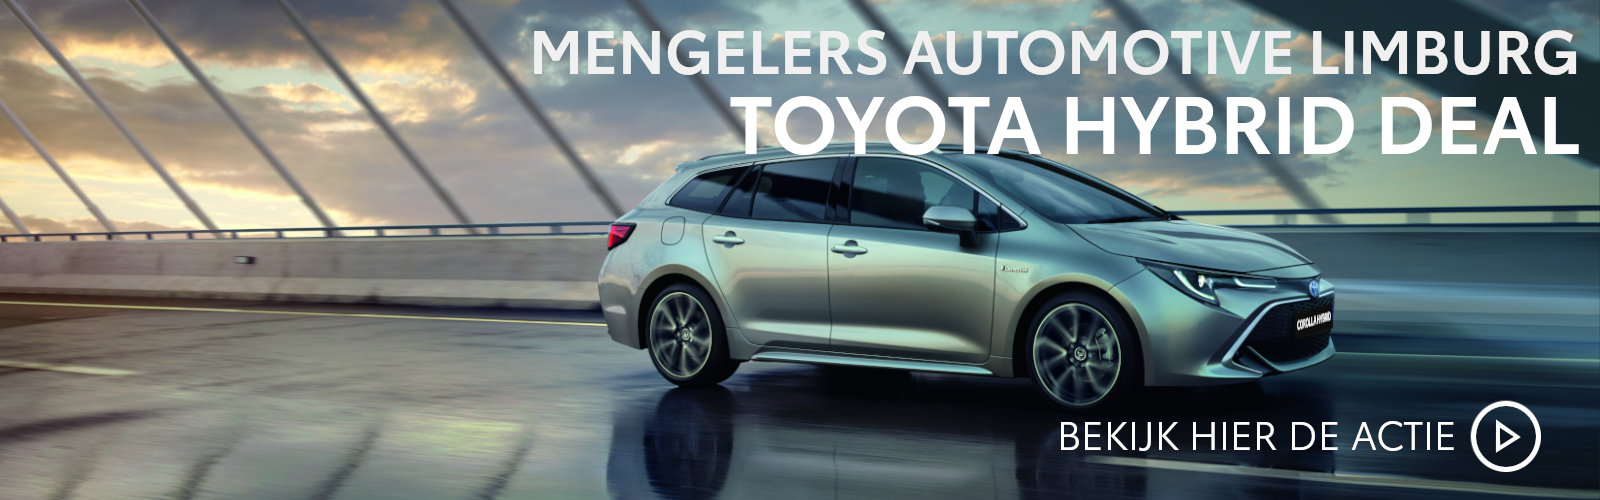 Toyota-Hybrid-Deal-Mengelers-Automotive-Limburg